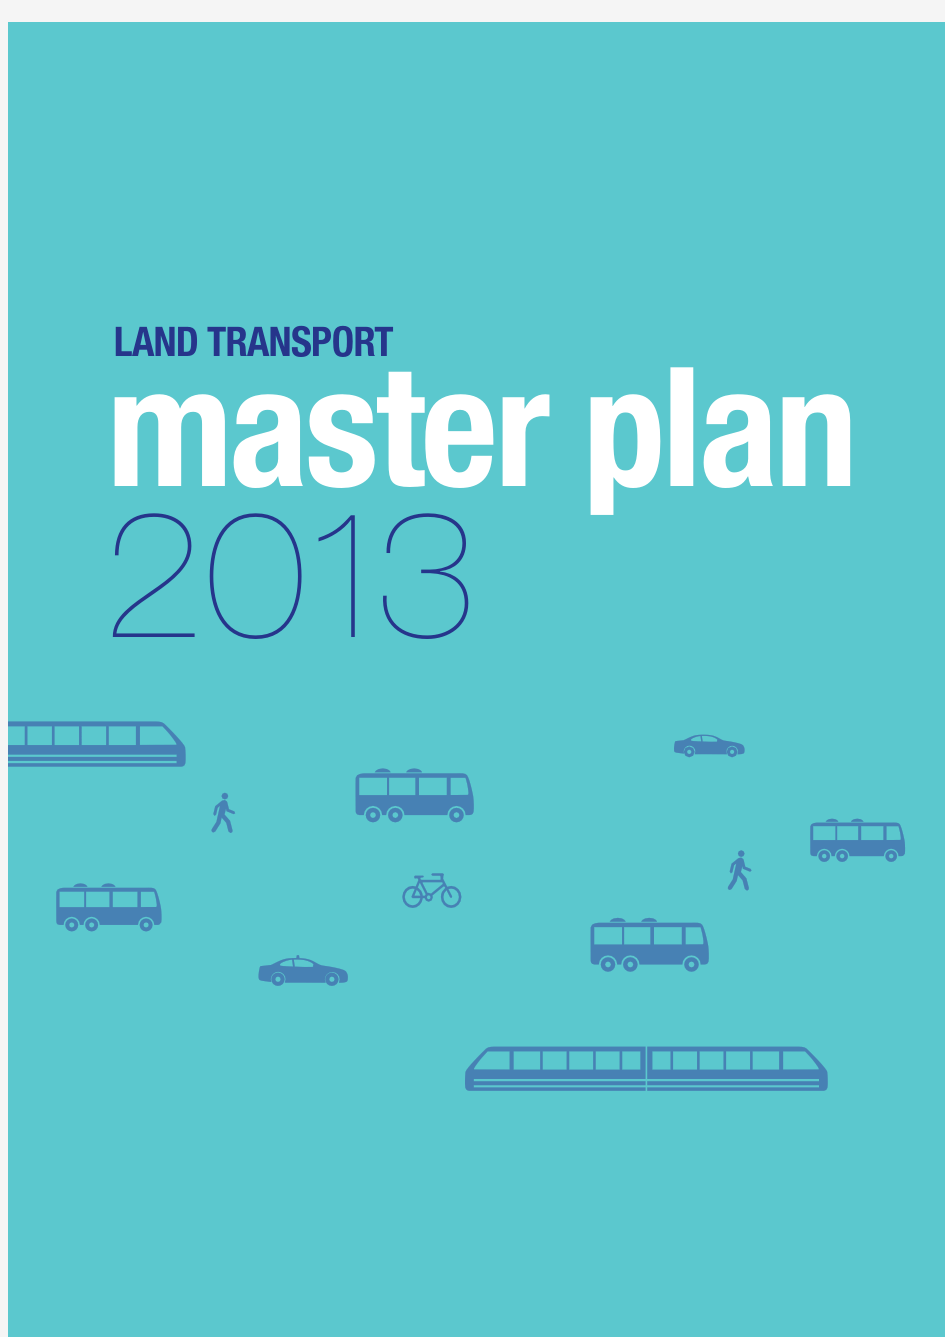 新加坡综合交通规划2013-LTMP2013Report(Land Transport Master Plan 2013)